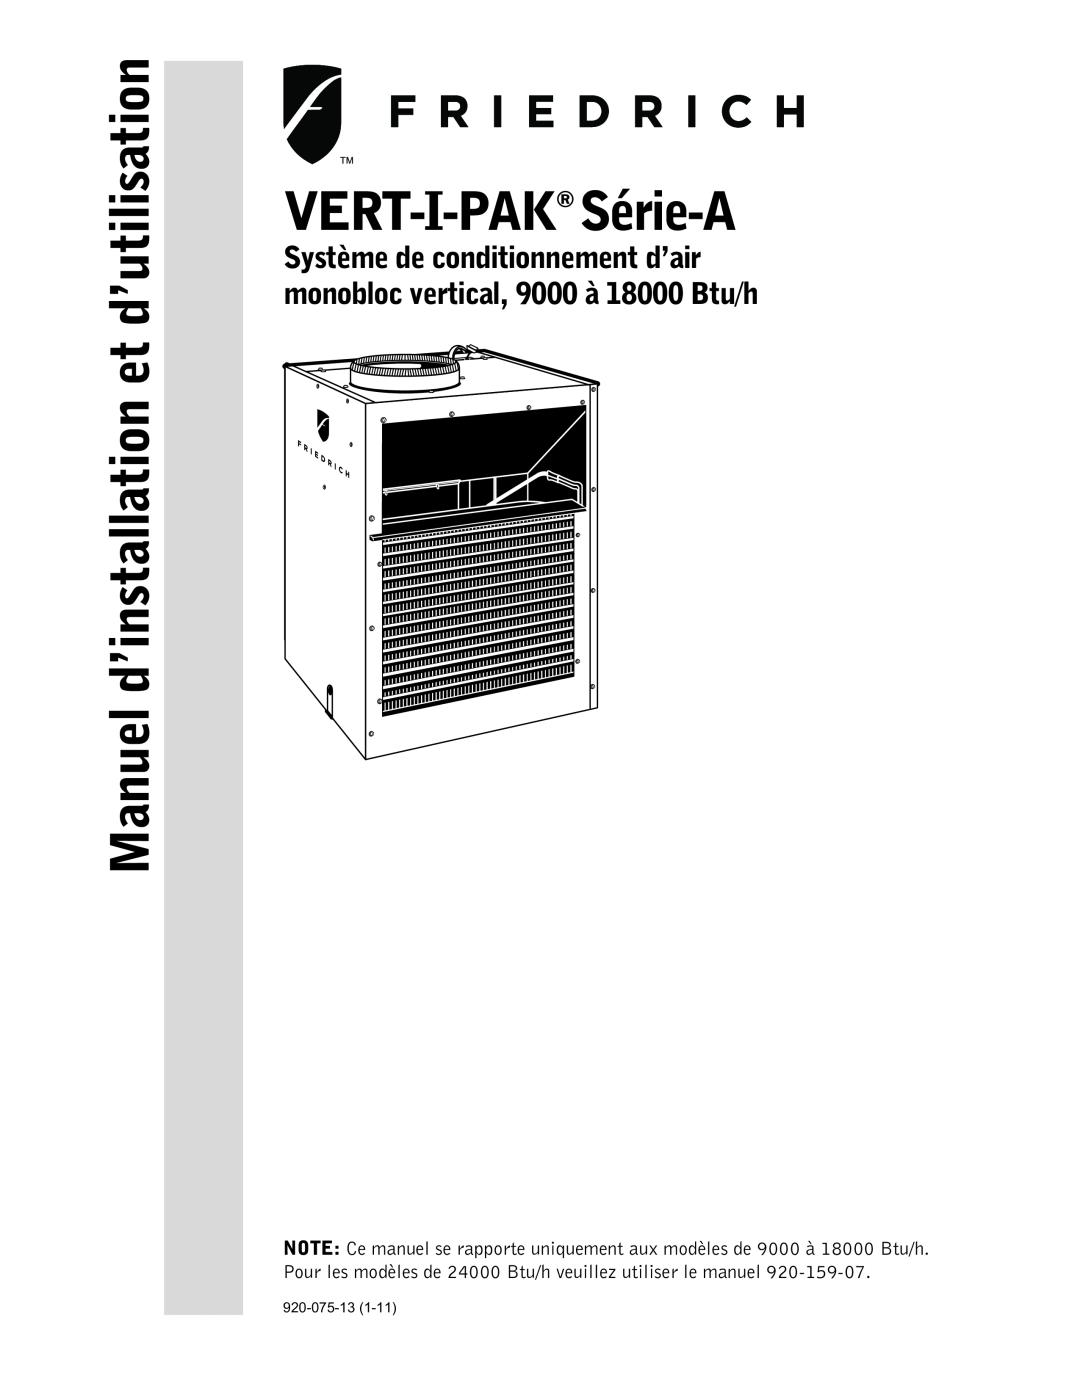 Friedrich 920-075-13 (1-11) operation manual VERT-I-PAK Série-A, Manuel d’installation et d’utilisation 